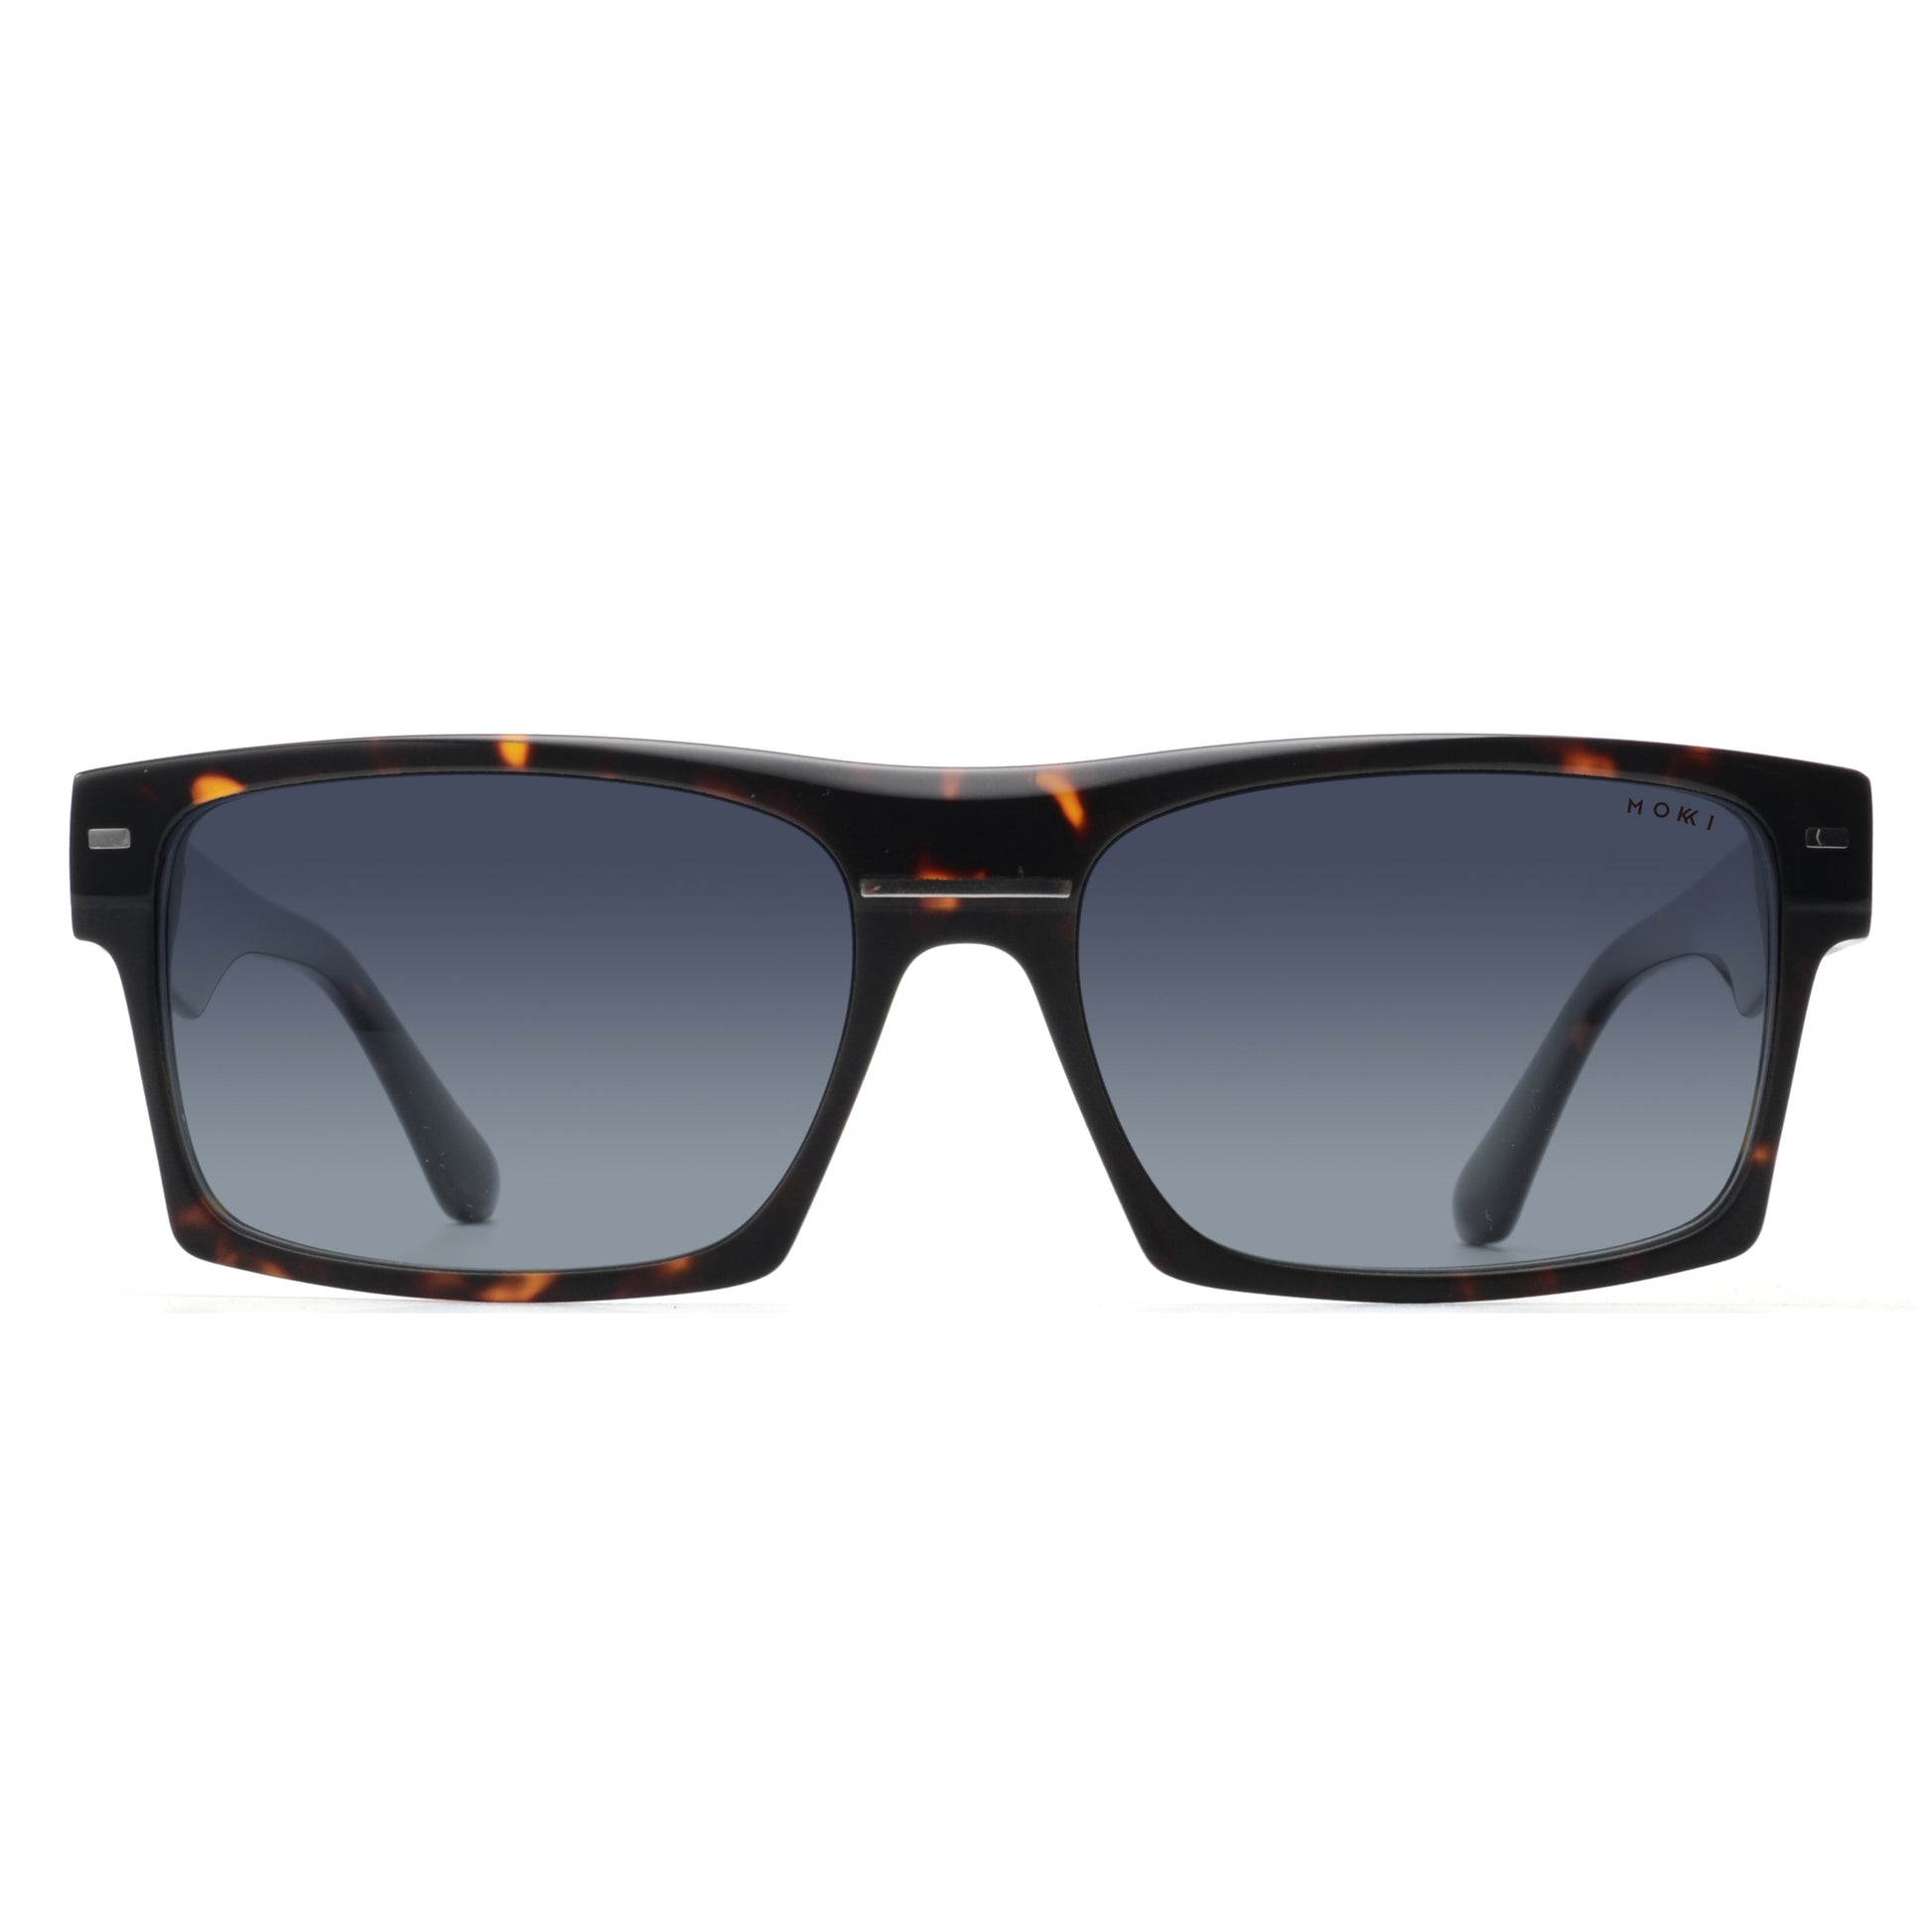 Mokki Sharp Square sunglasses in pattern